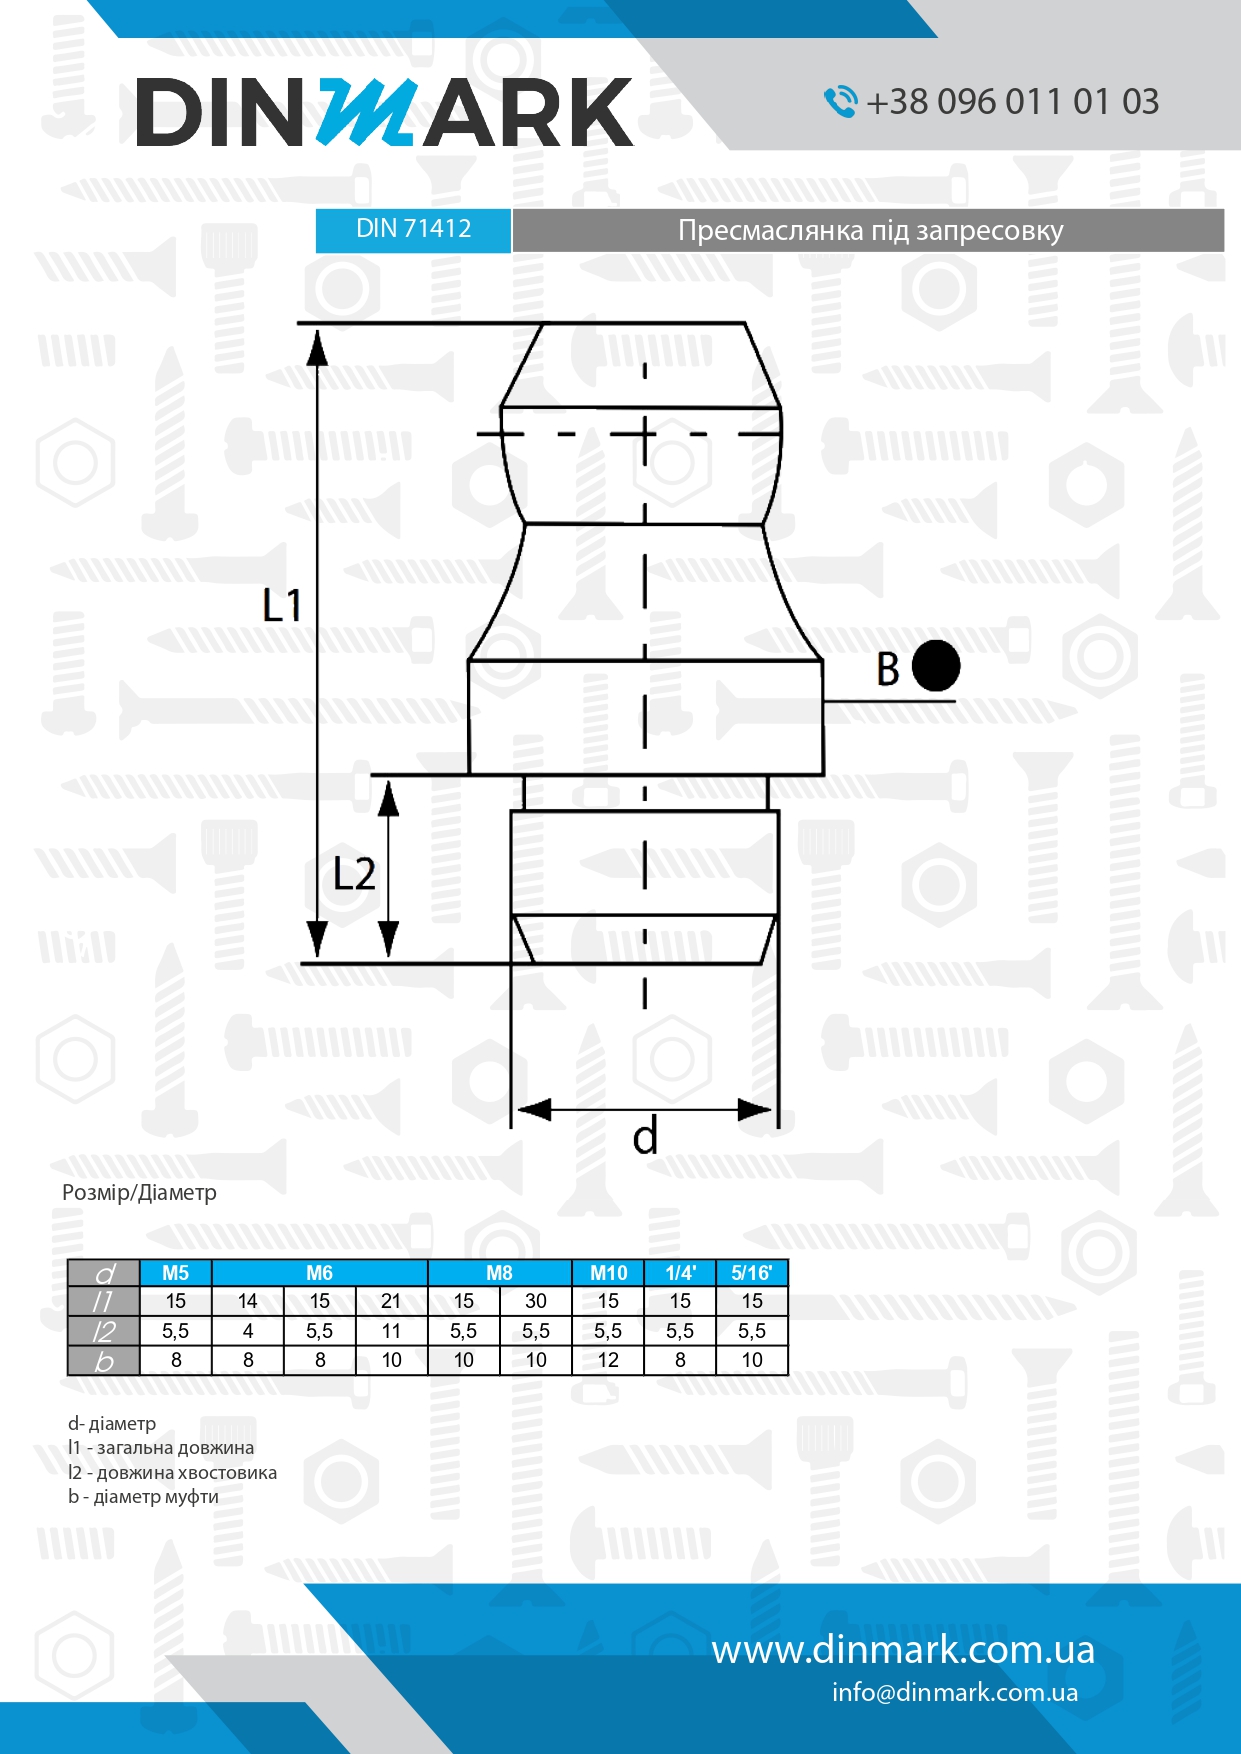 DIN 71412-A A1 Oil press for pressing 180 degrees pdf